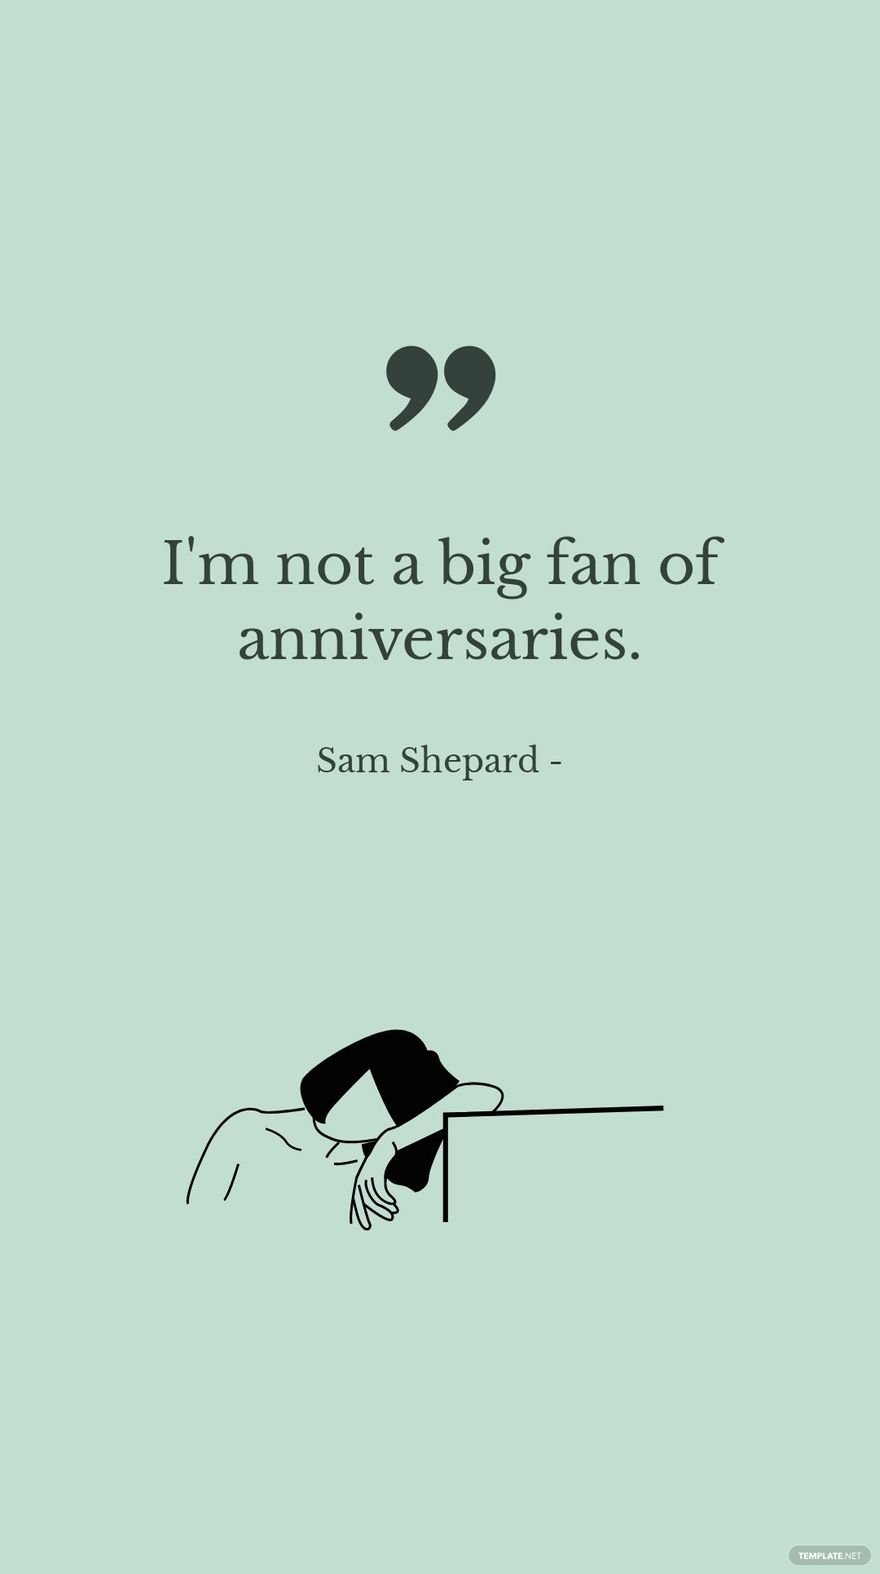 Sam Shepard - I'm not a big fan of anniversaries.